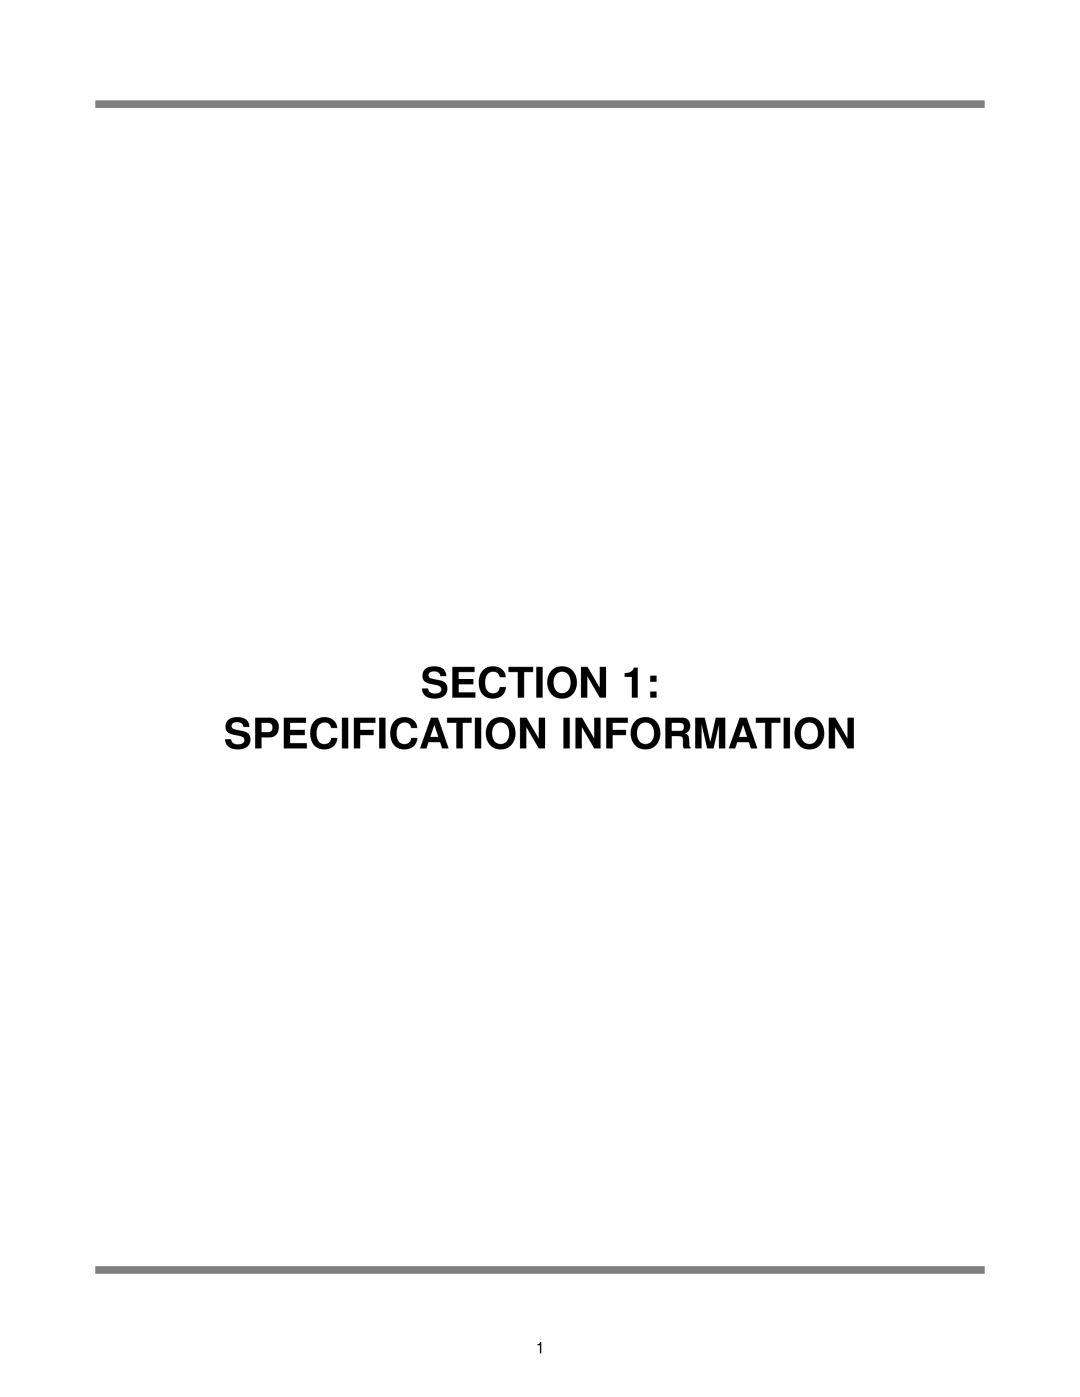 Jackson DELTA 5 D, Delta 5 technical manual Section Specification Information 